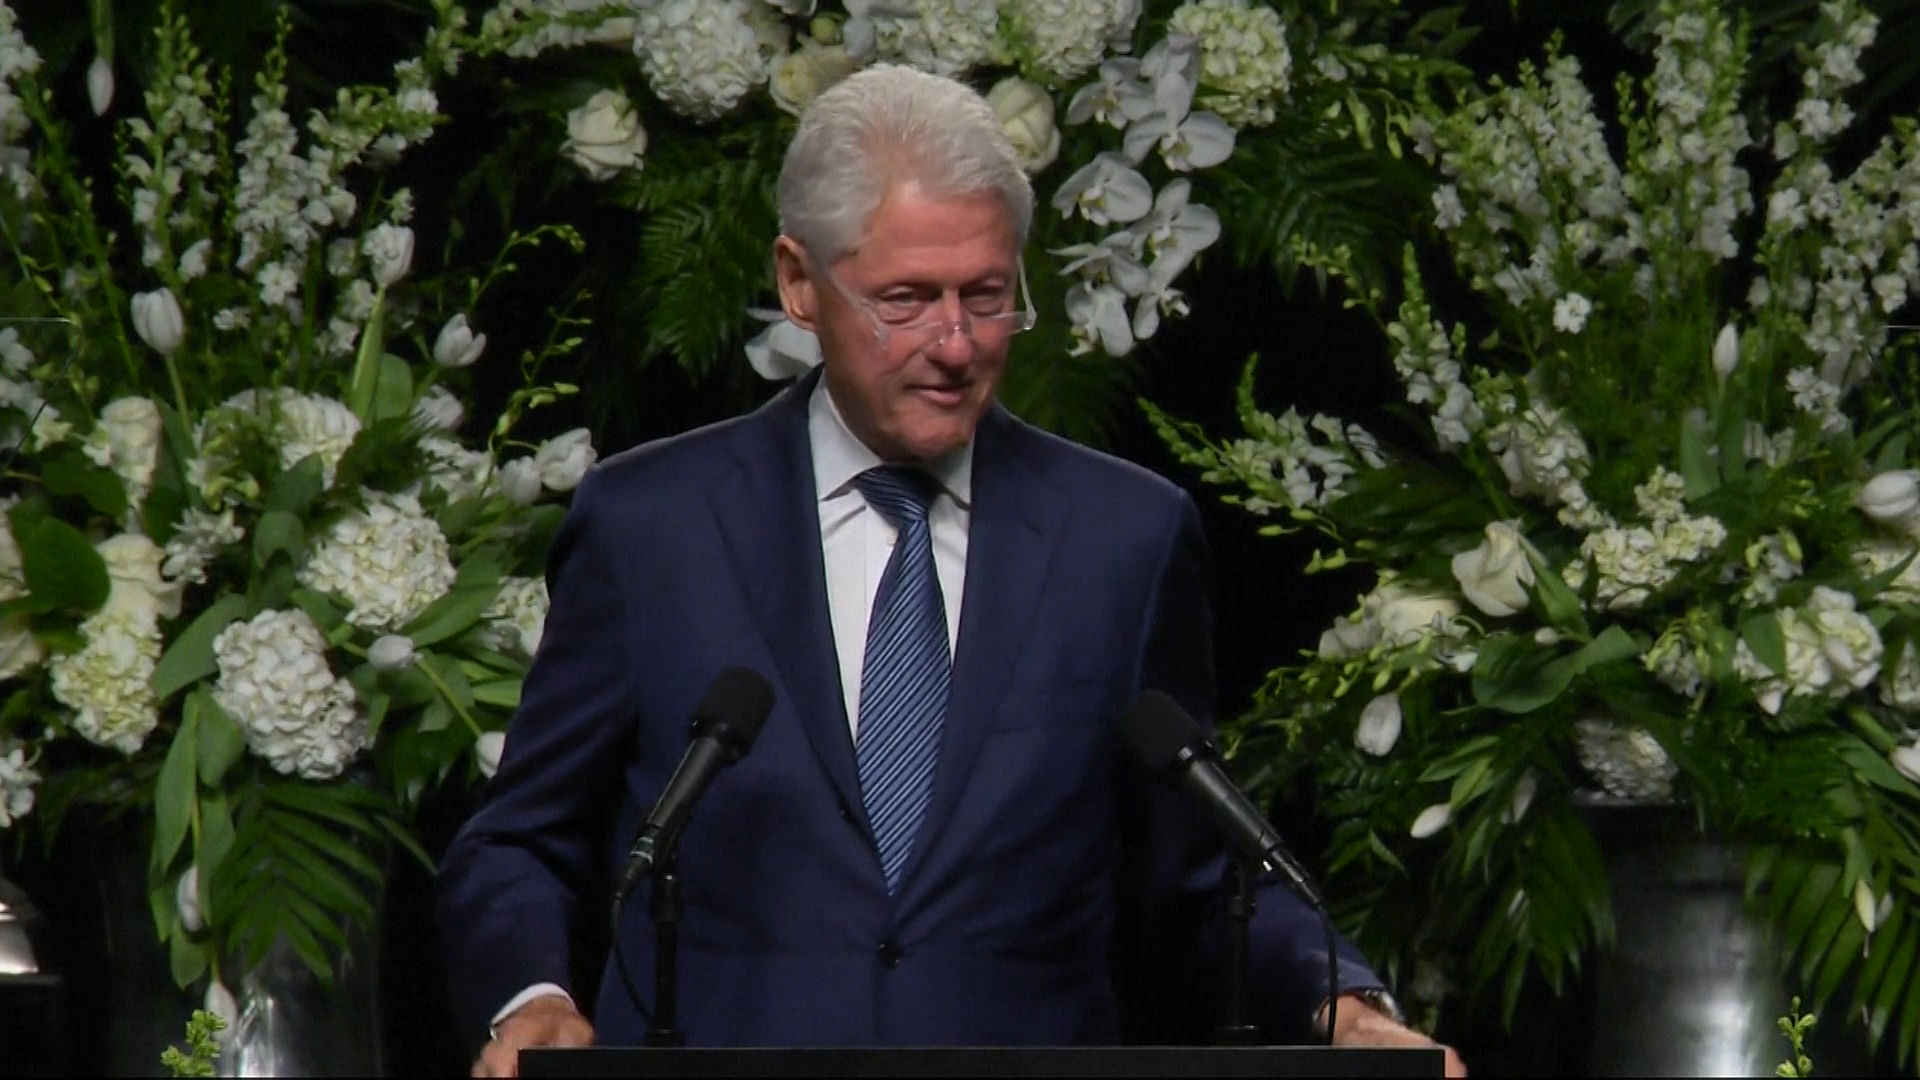 Bill Clinton Speaks at Muhammad Ali’s funeral. (Photo: AP/KFCM)